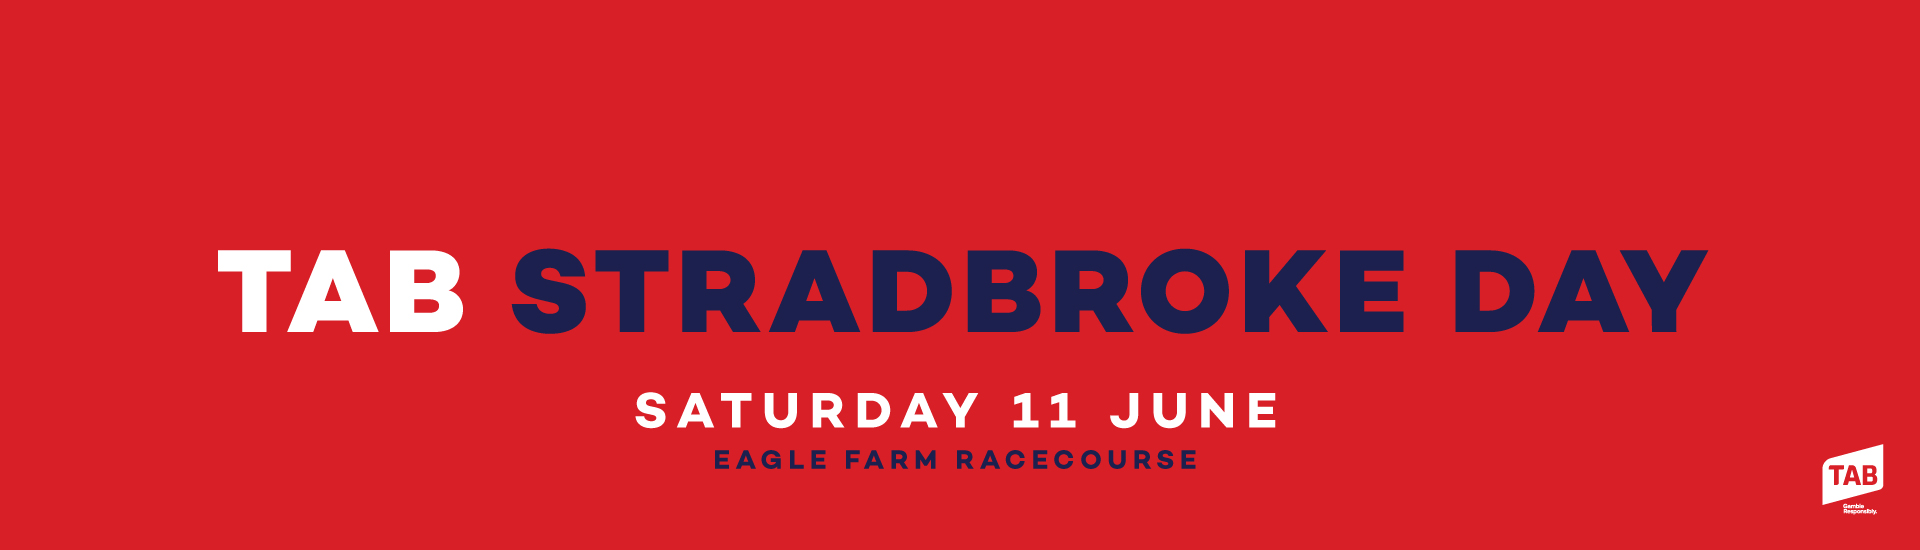 06_StradbrokeDay_Web-banner-1920x550_sponsor | Brisbane Racing Club